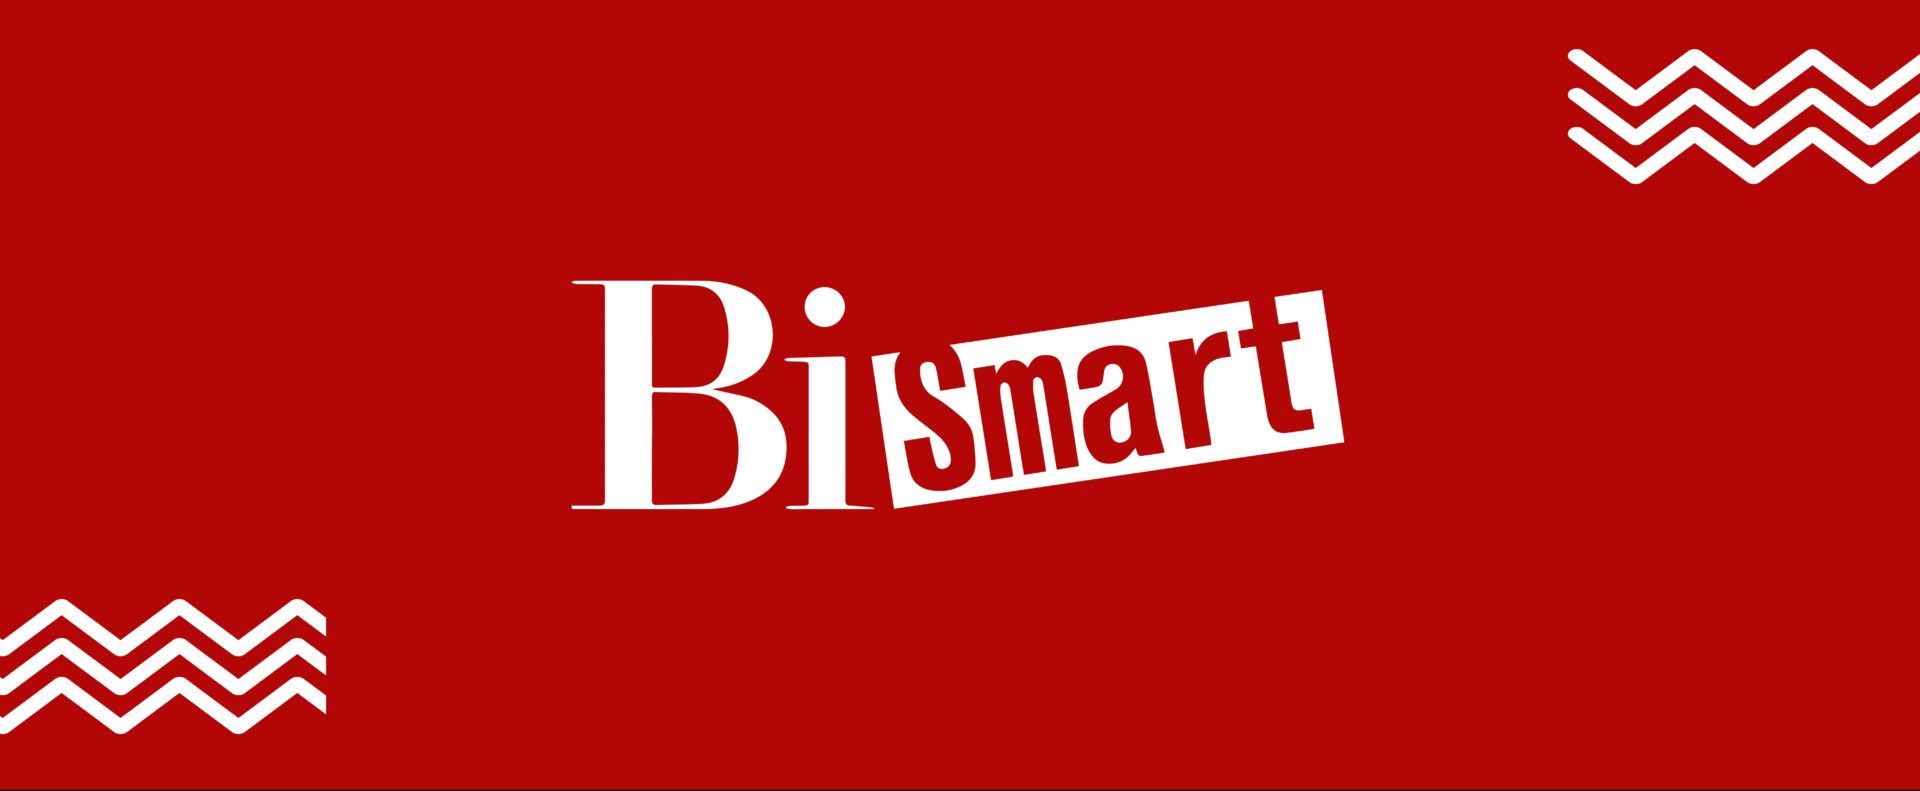 BISMART creation de contenu